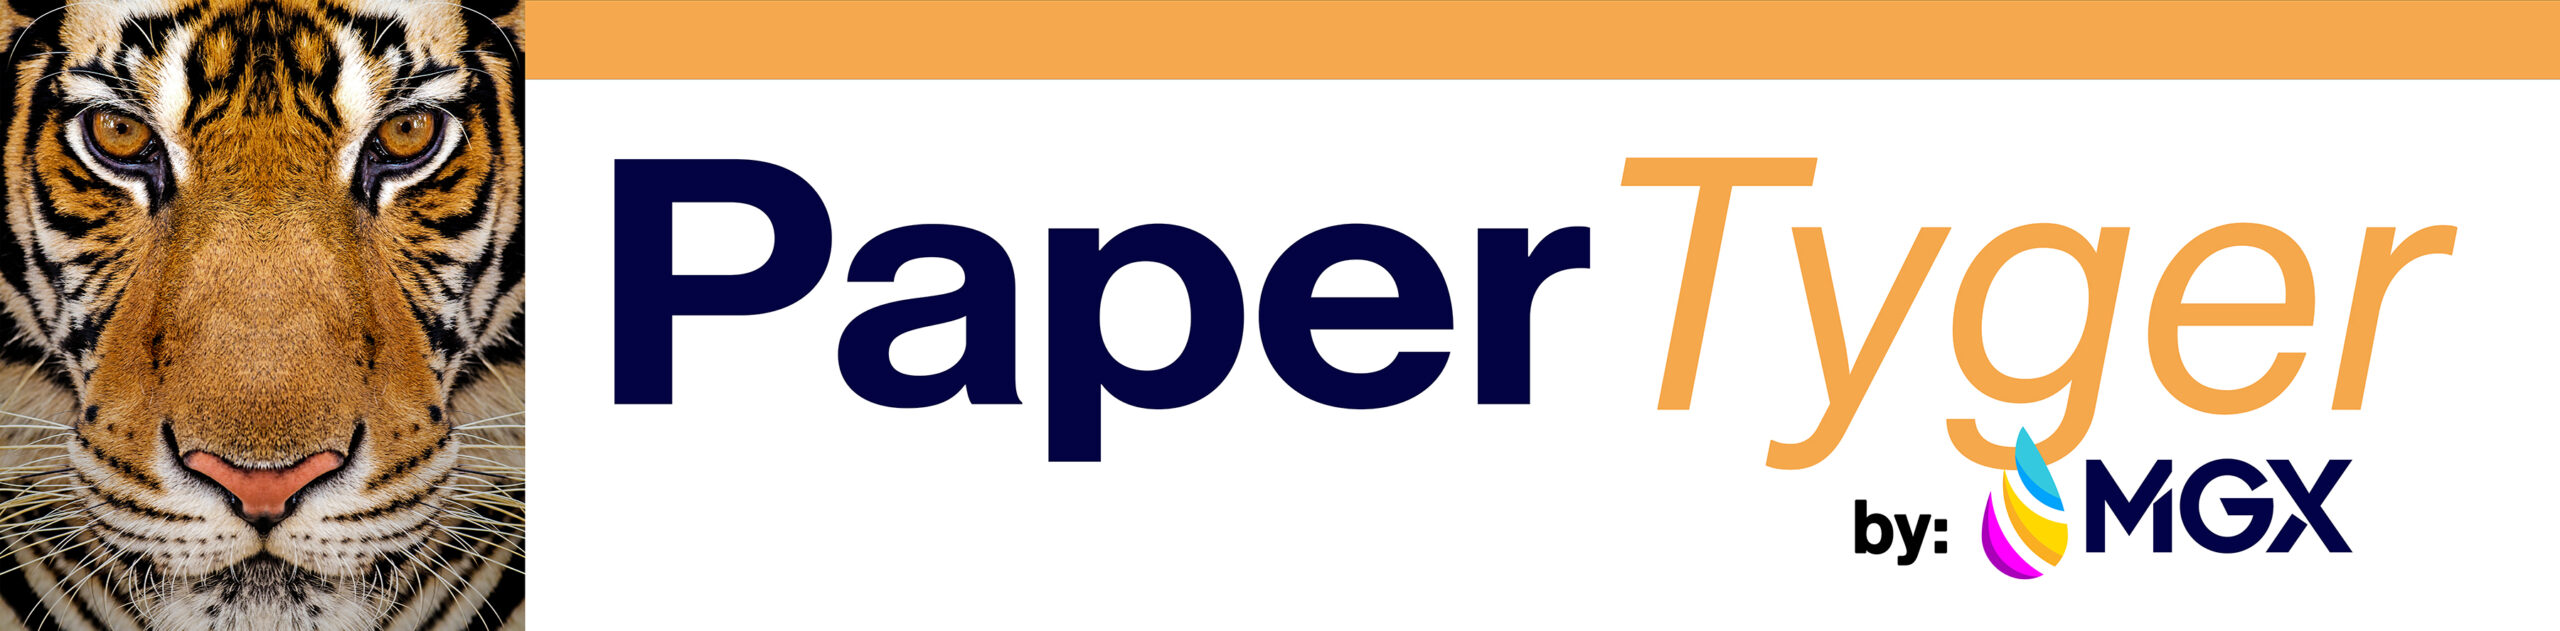 PaperTyger by MGX logo